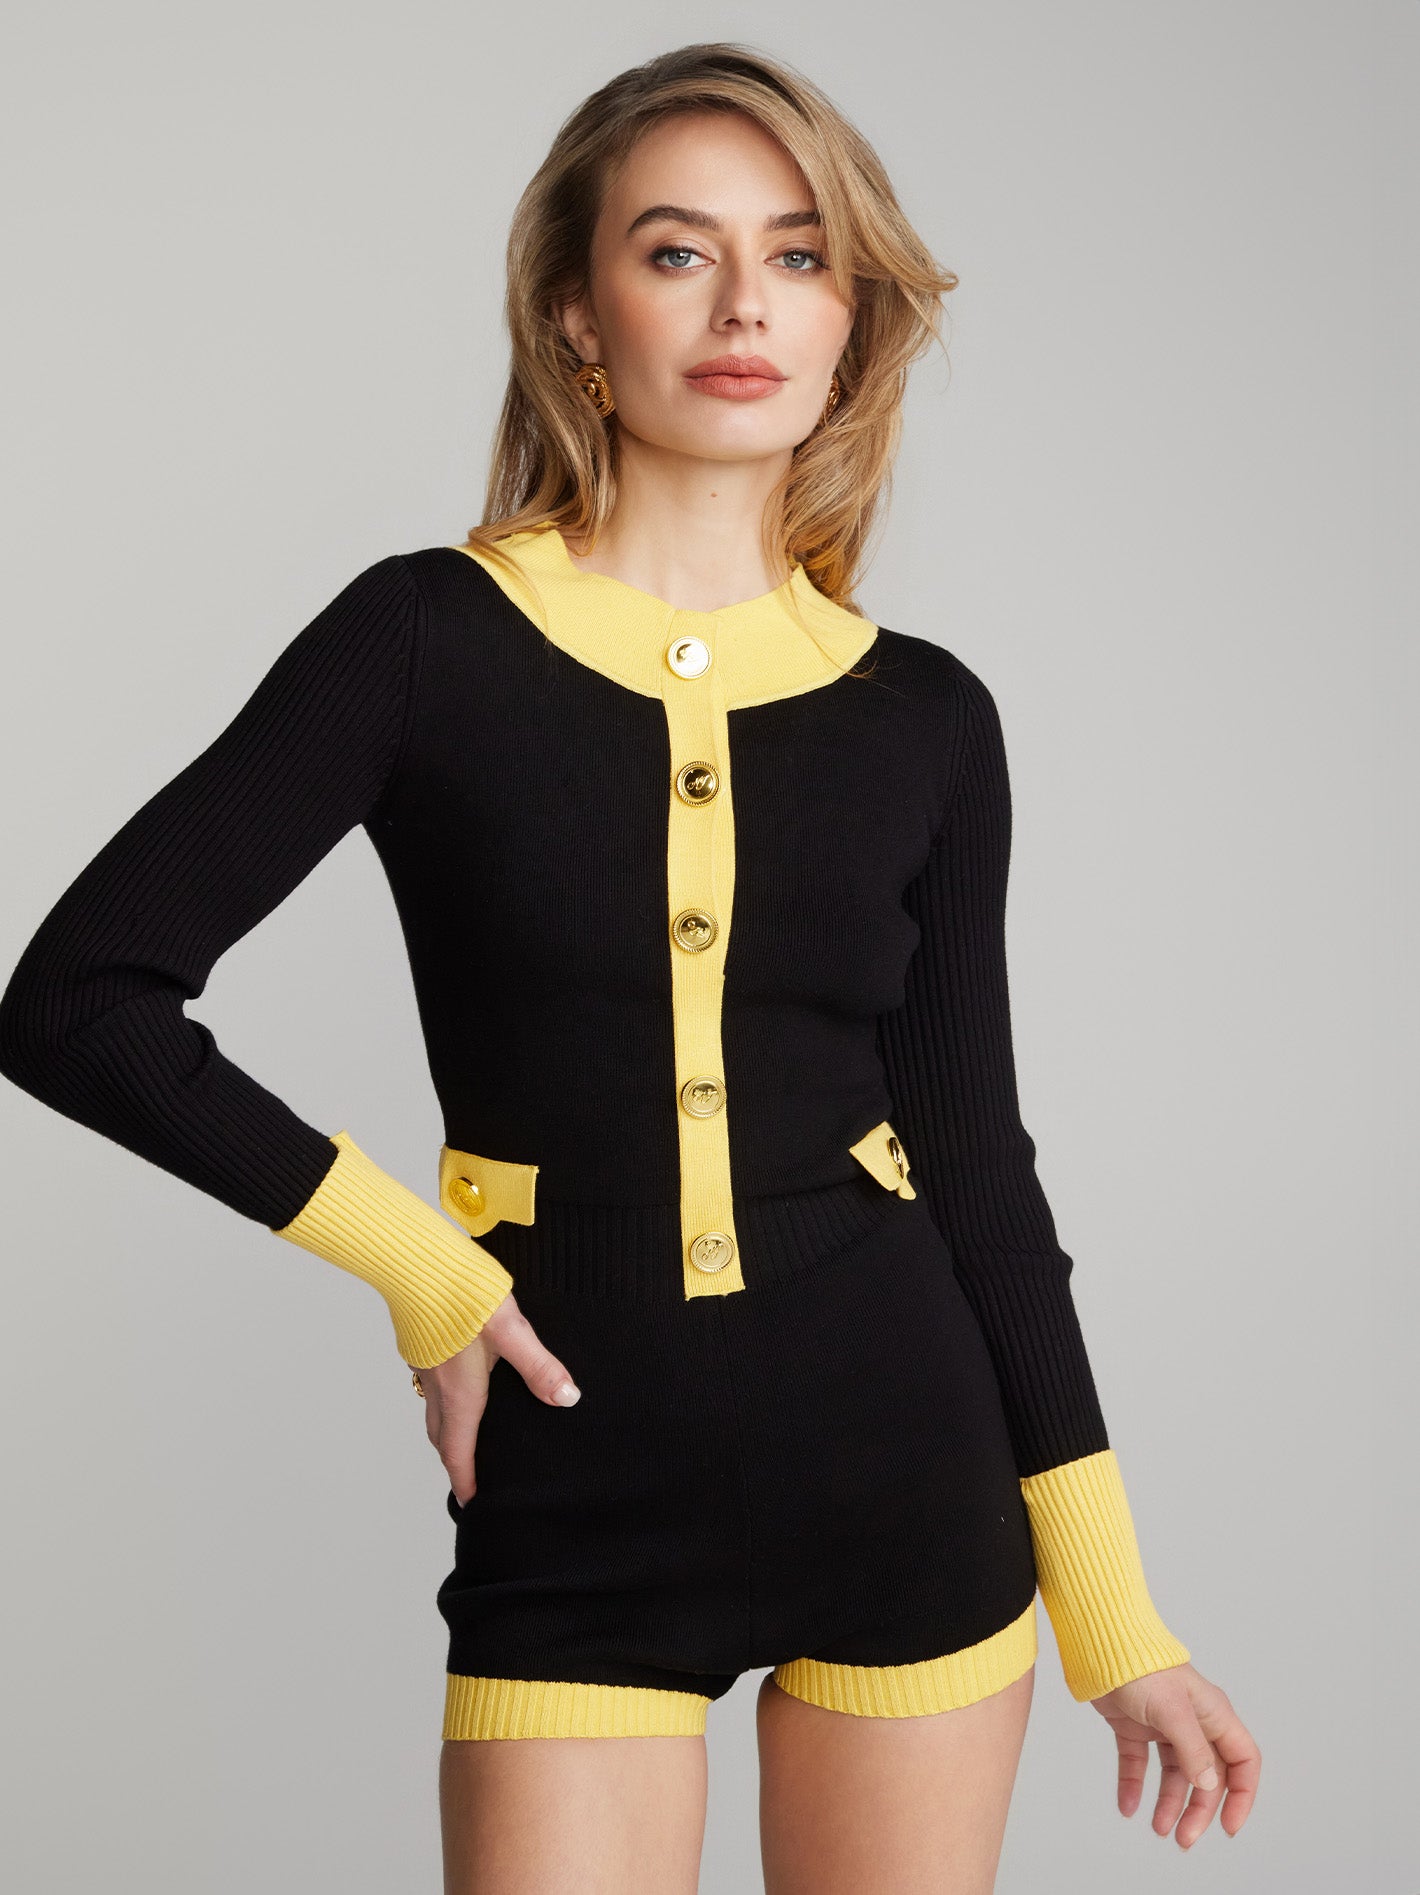 Matilda Knit Jumpsuit (Black & Yellow)